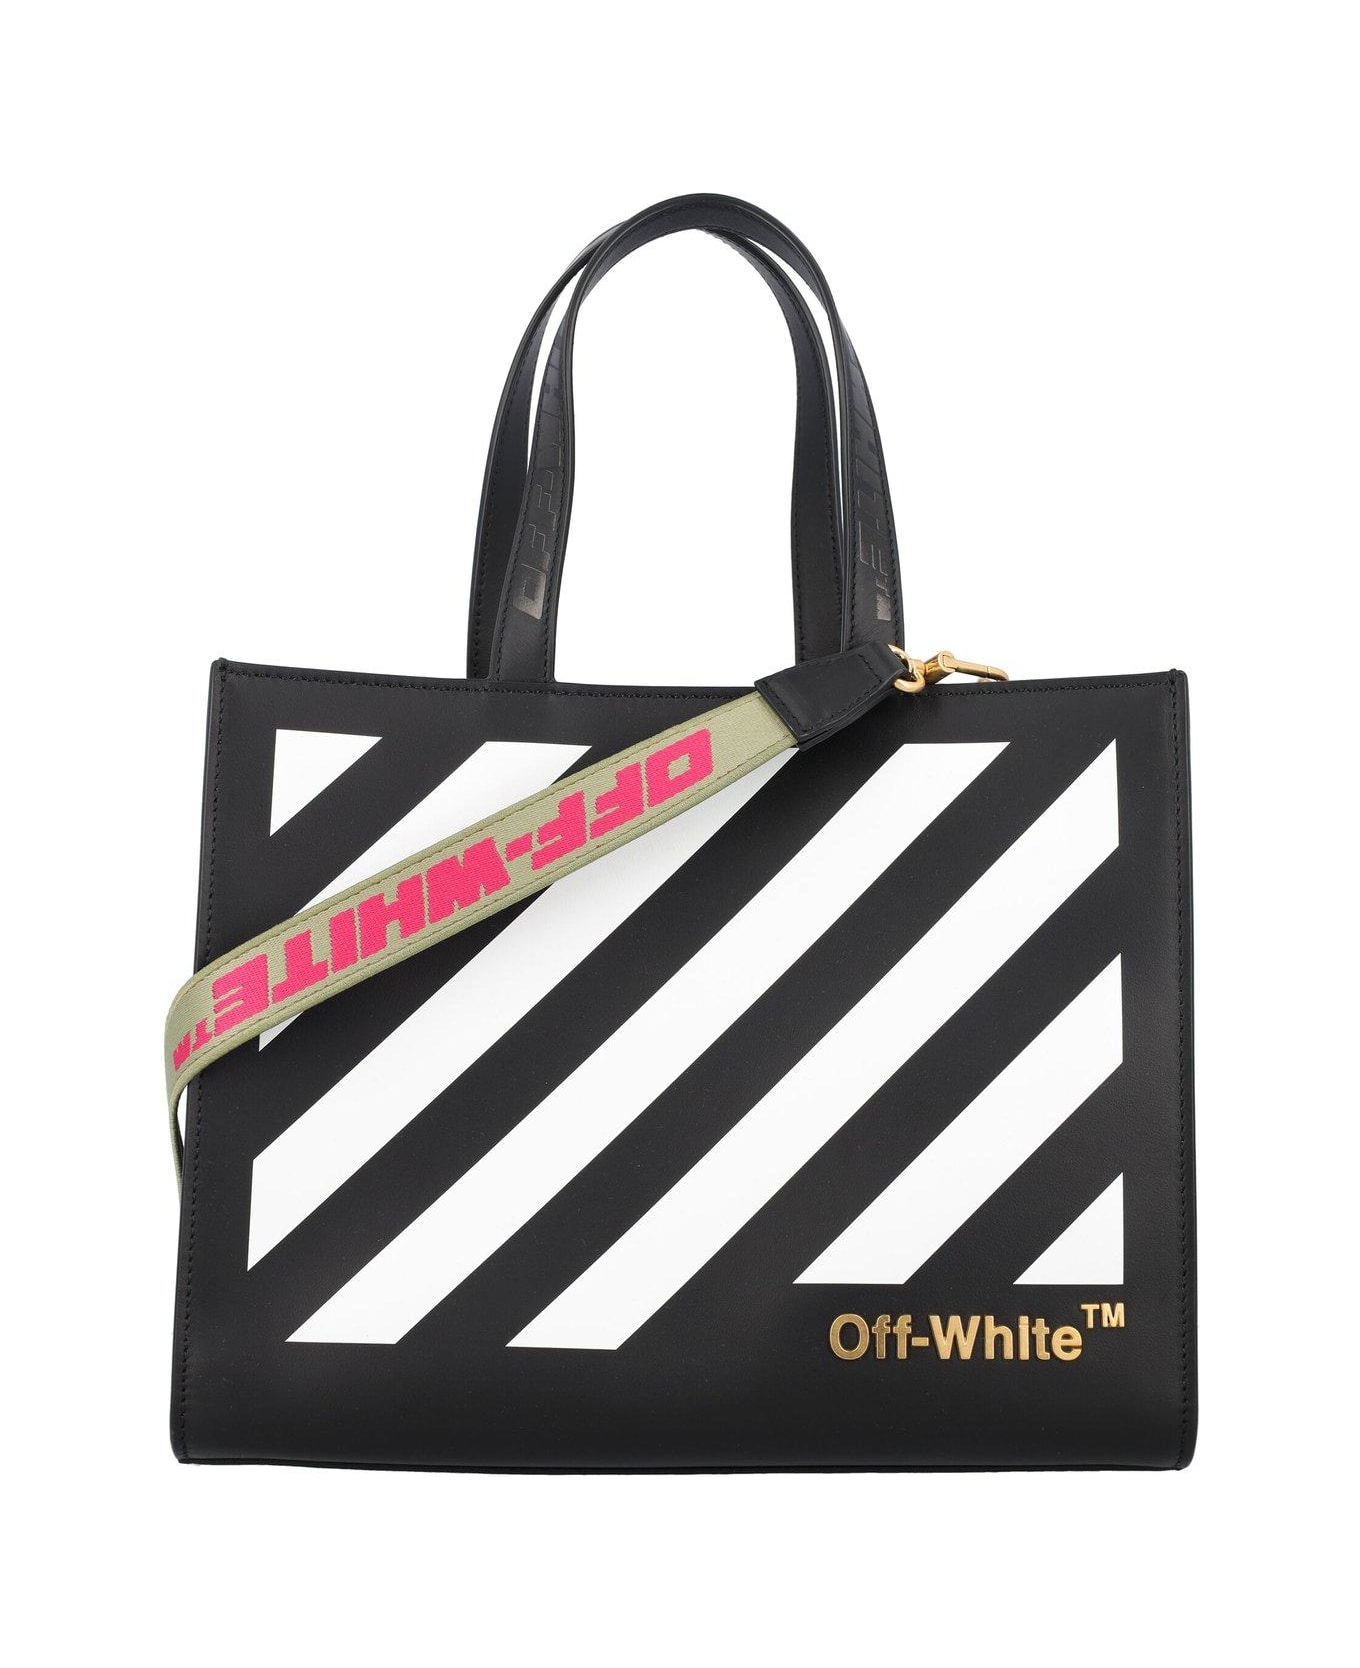 Off-White Diag Hybrid Shop 28 Strapped Tote Bag - Black